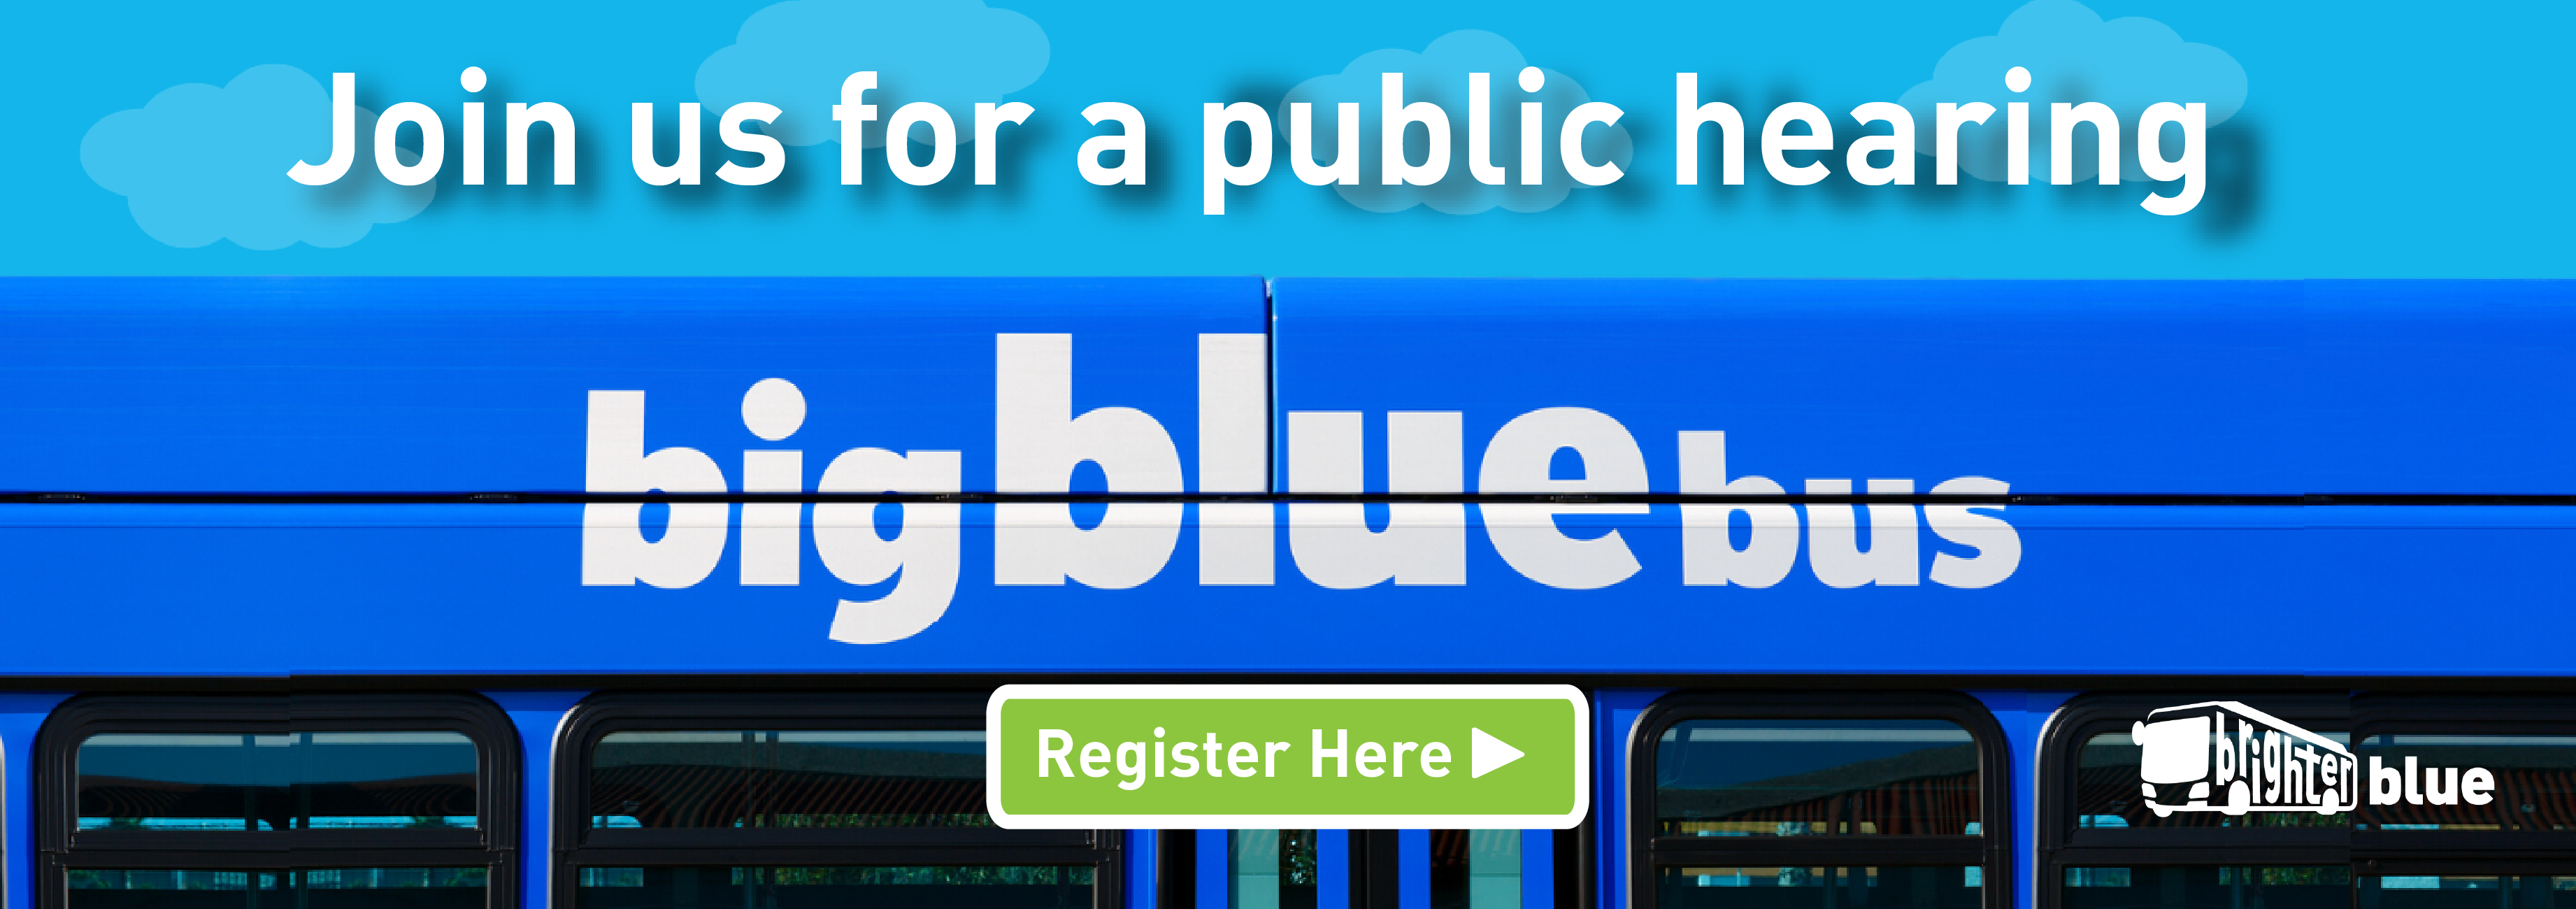 Brighter Blue - Public Hearings